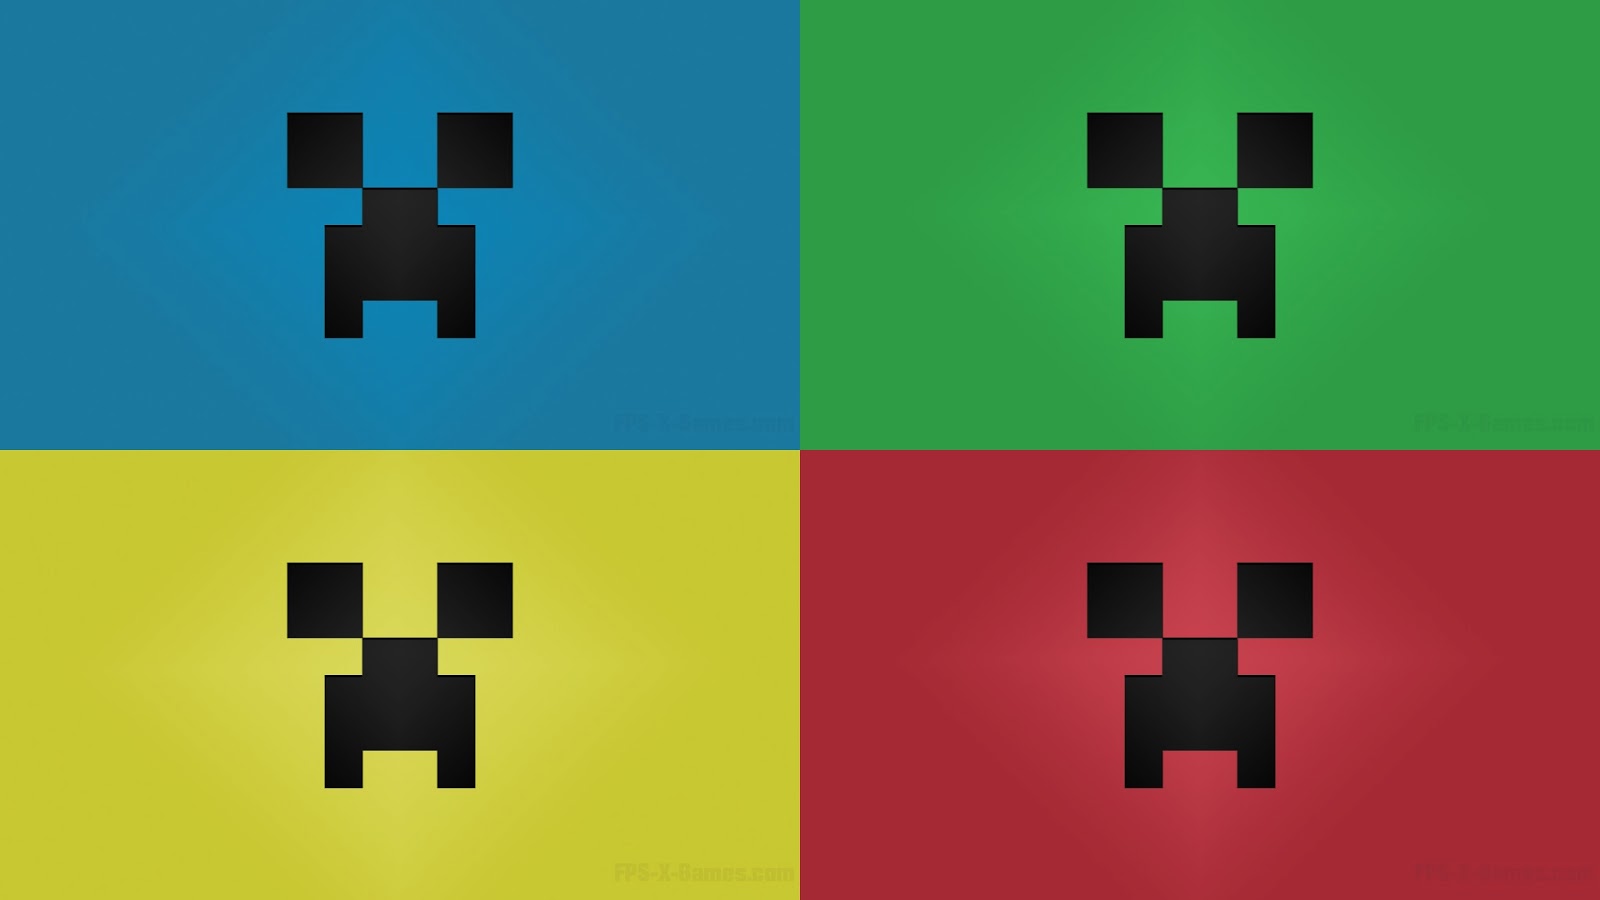 Primary Colors Minecraft Creeper Desktop Wallpaper Large